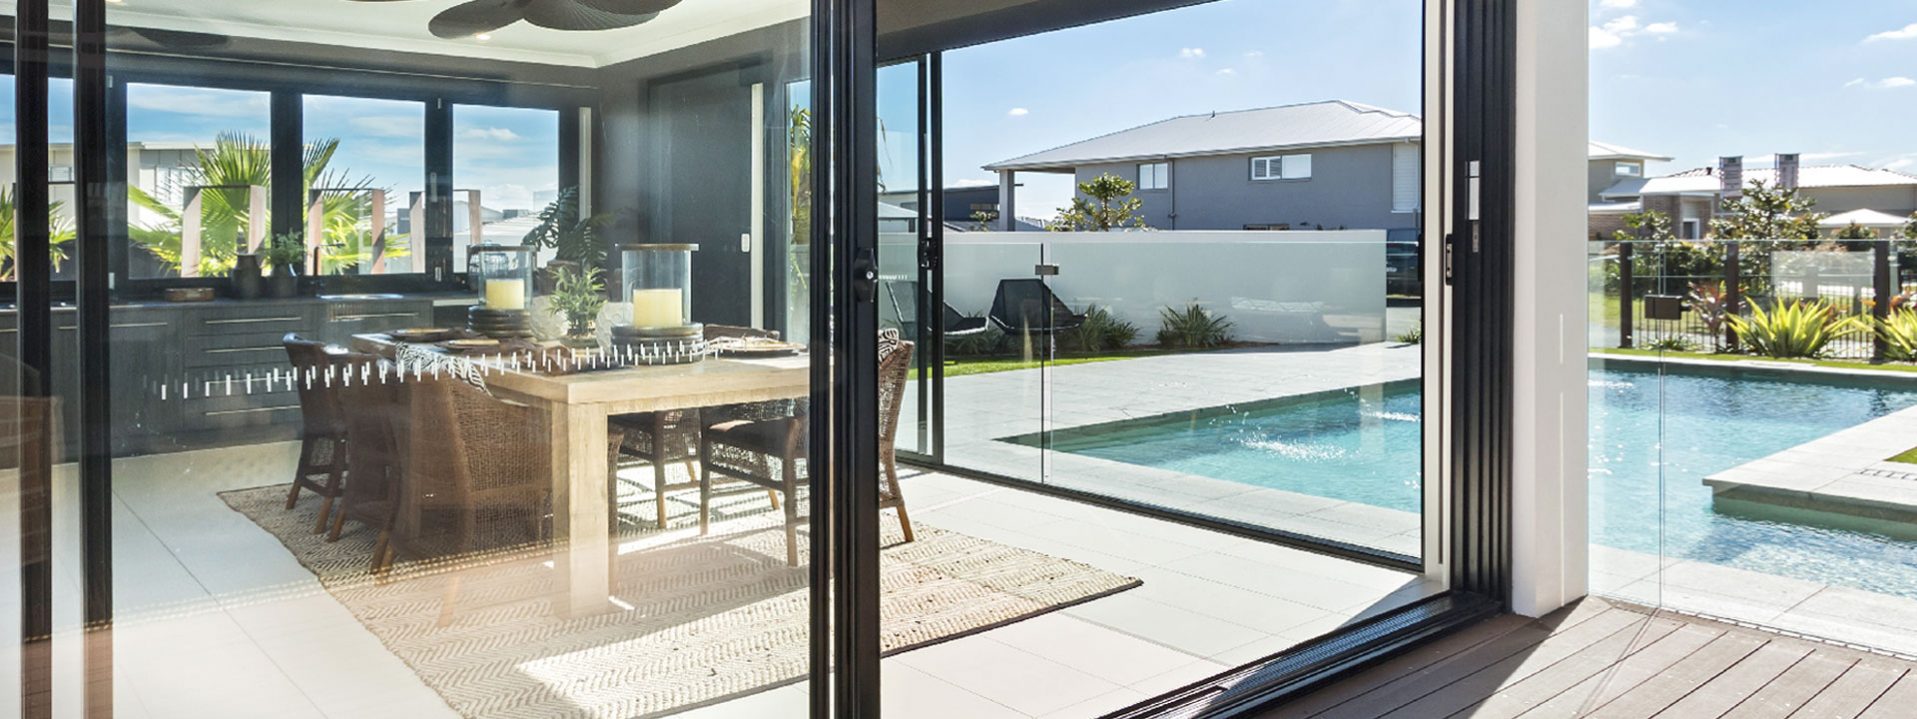 Full-length aluminium sliding security screen windows located within a Perth backyard.